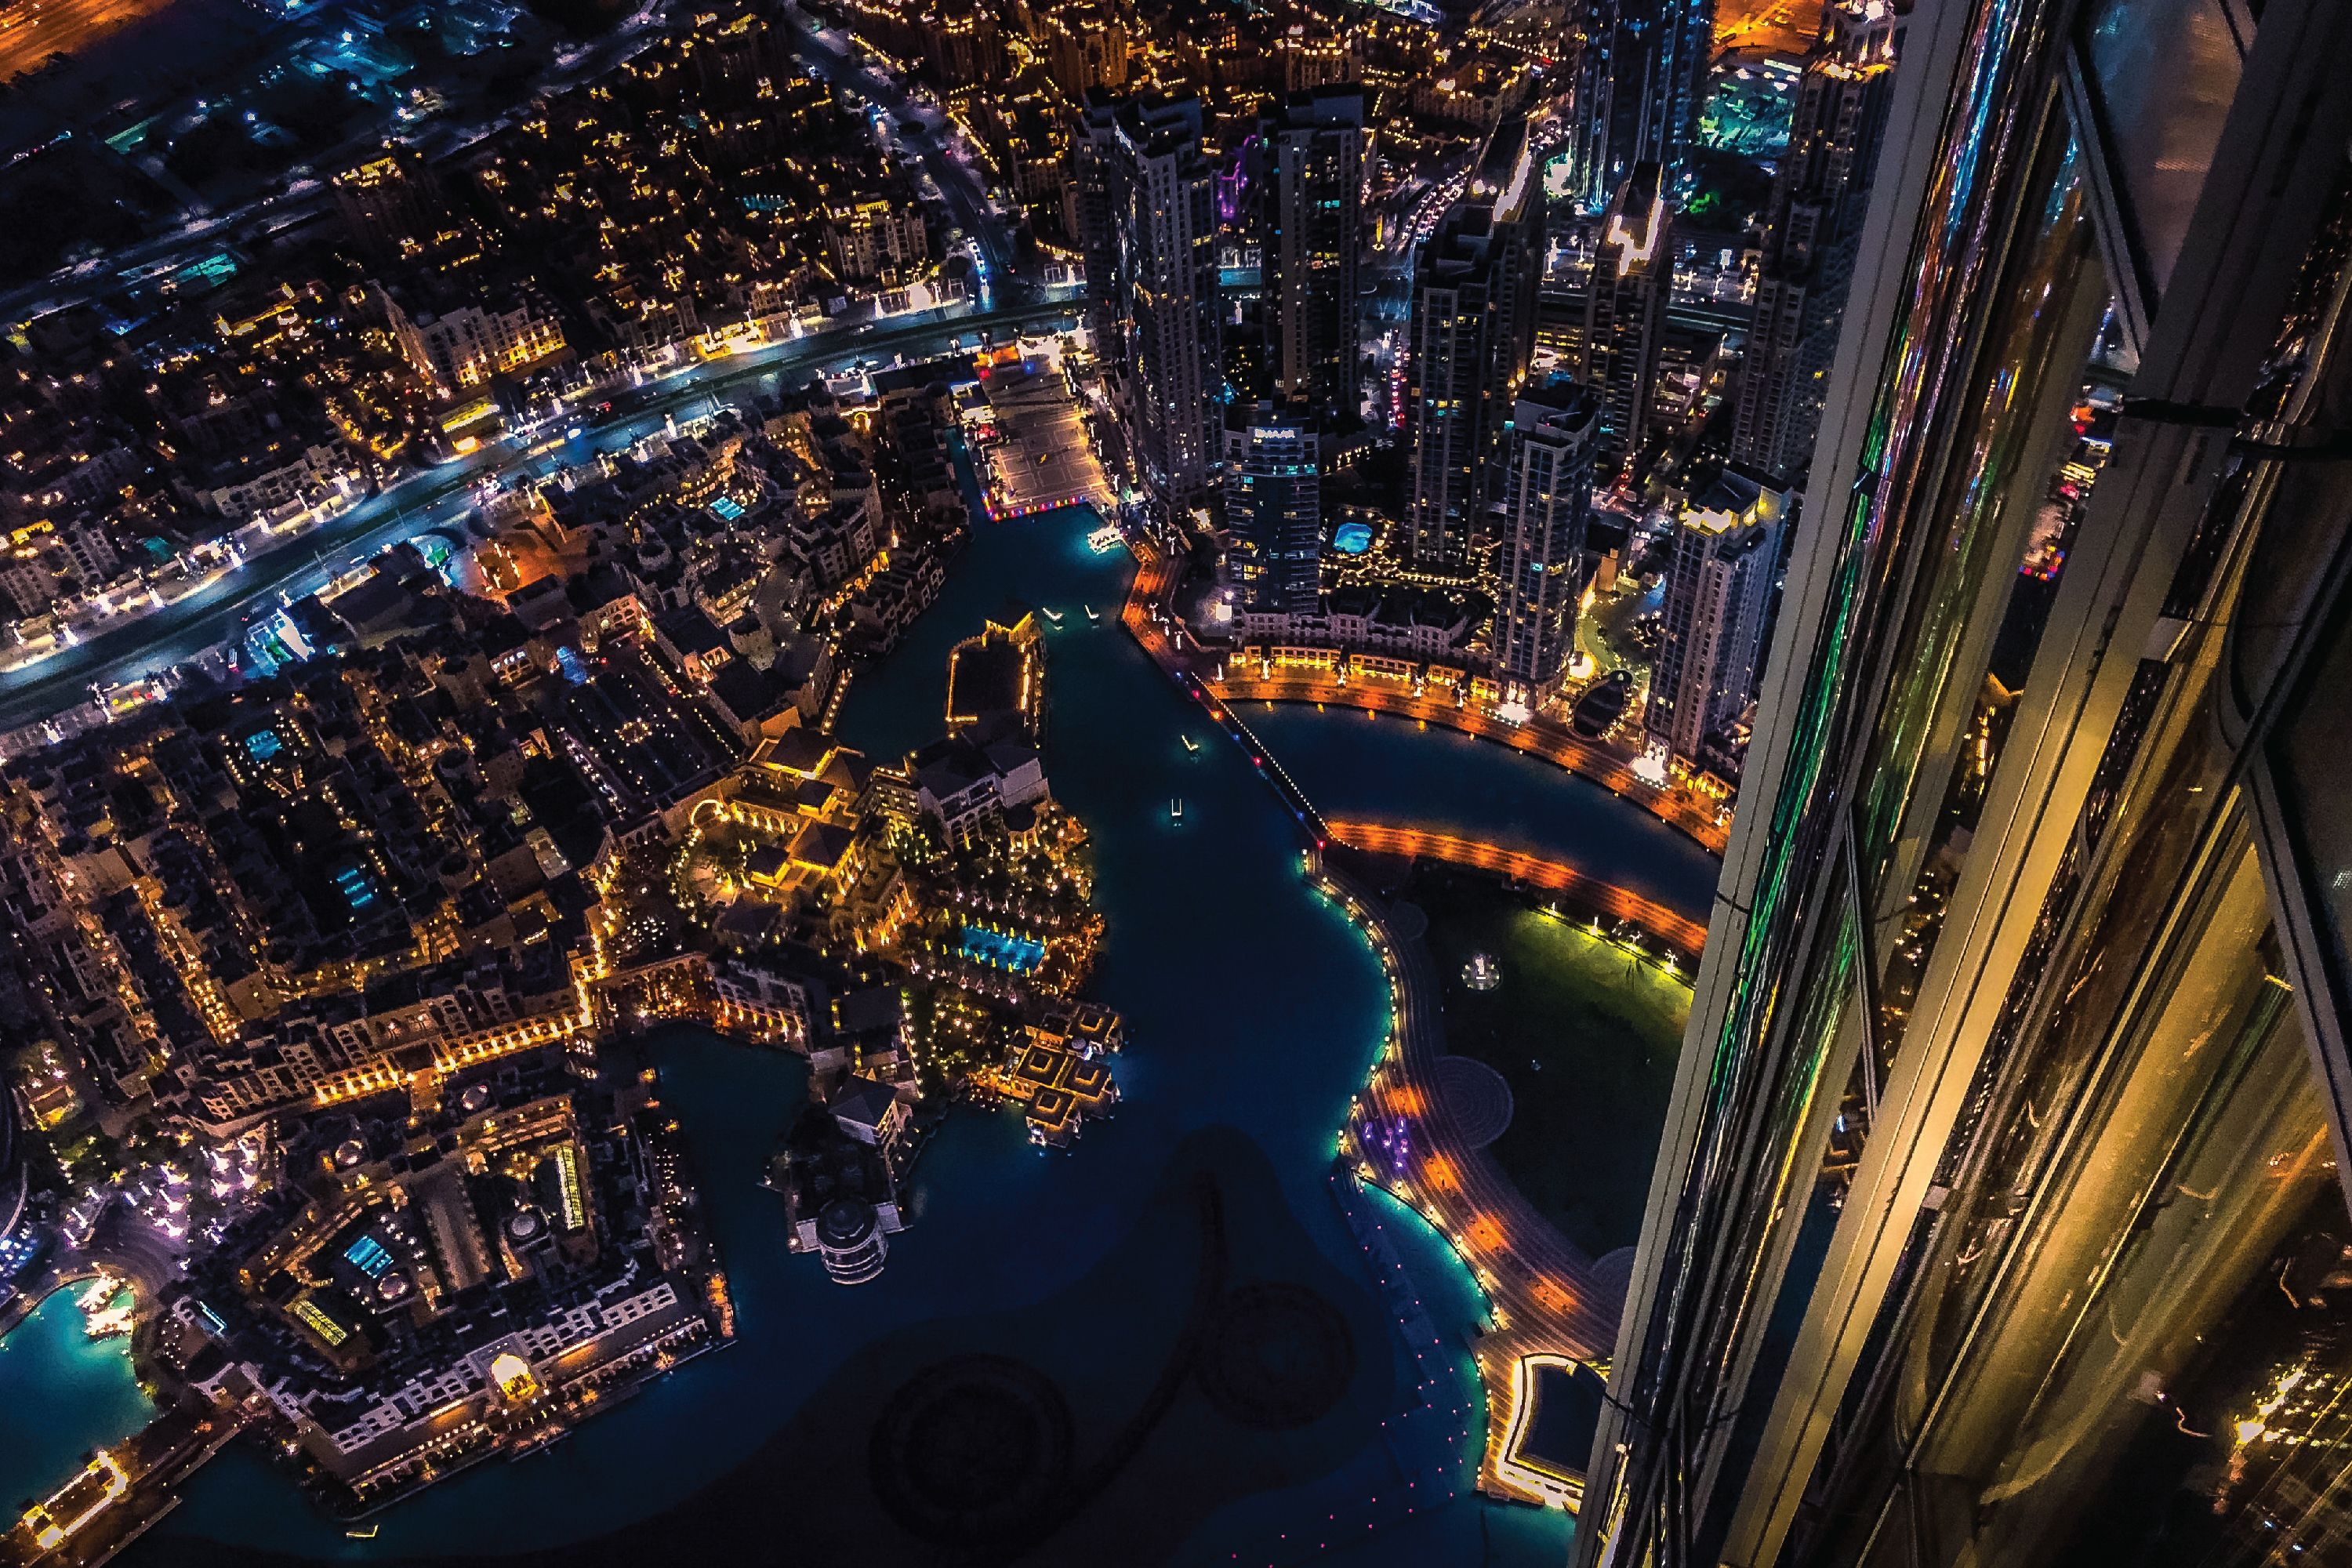 Burj Khalifa 124 Floor - At The Top - Amani Travel & Tourism